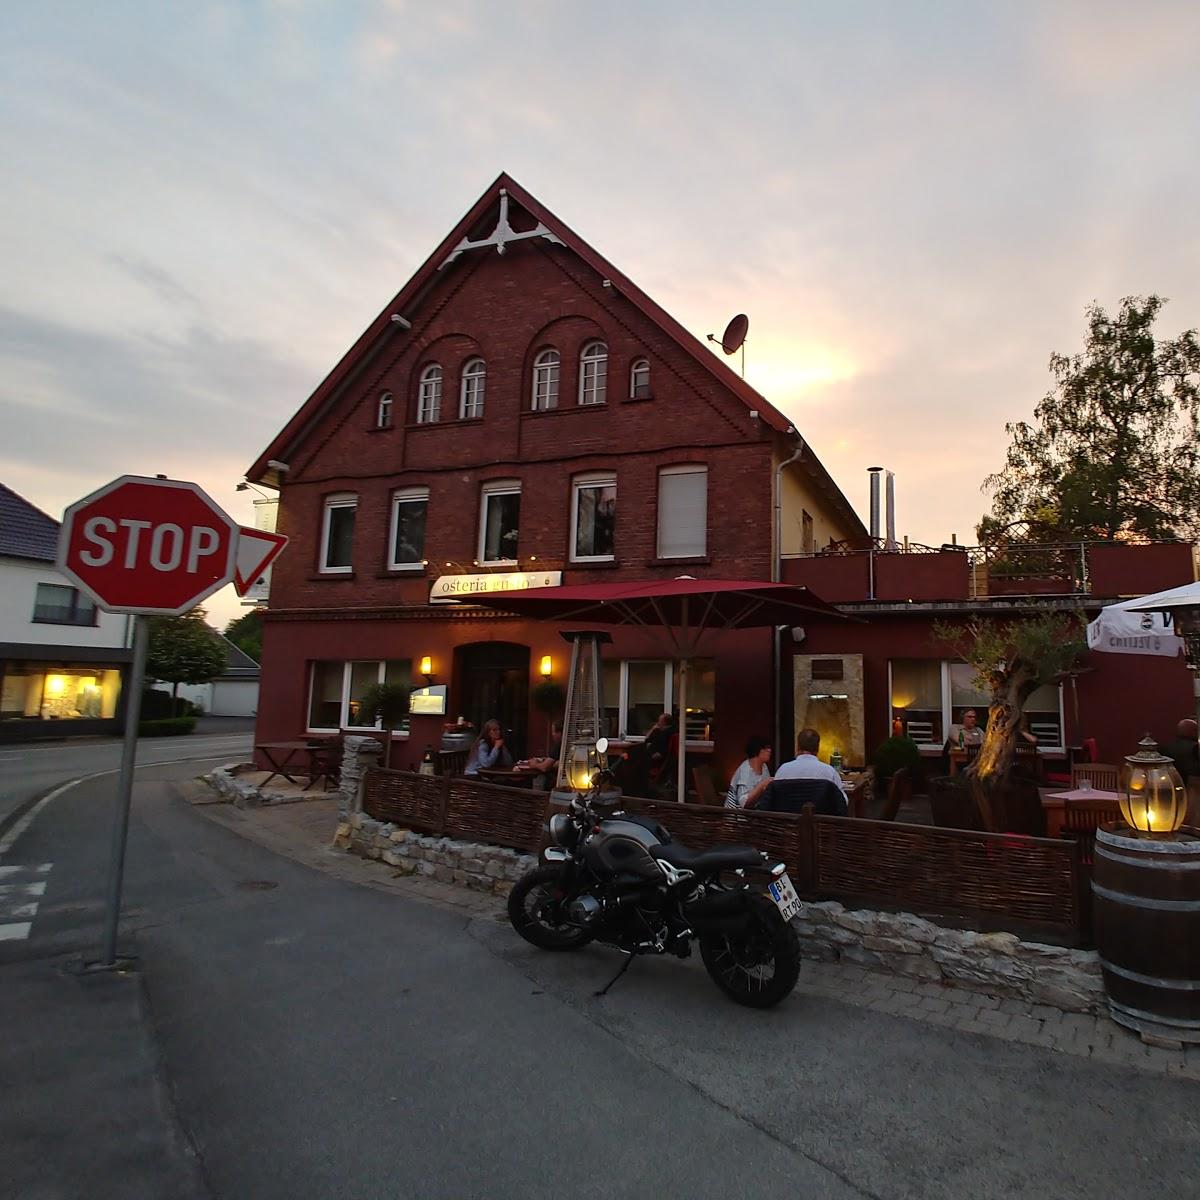 Restaurant "Osteria Gusto" in Verl